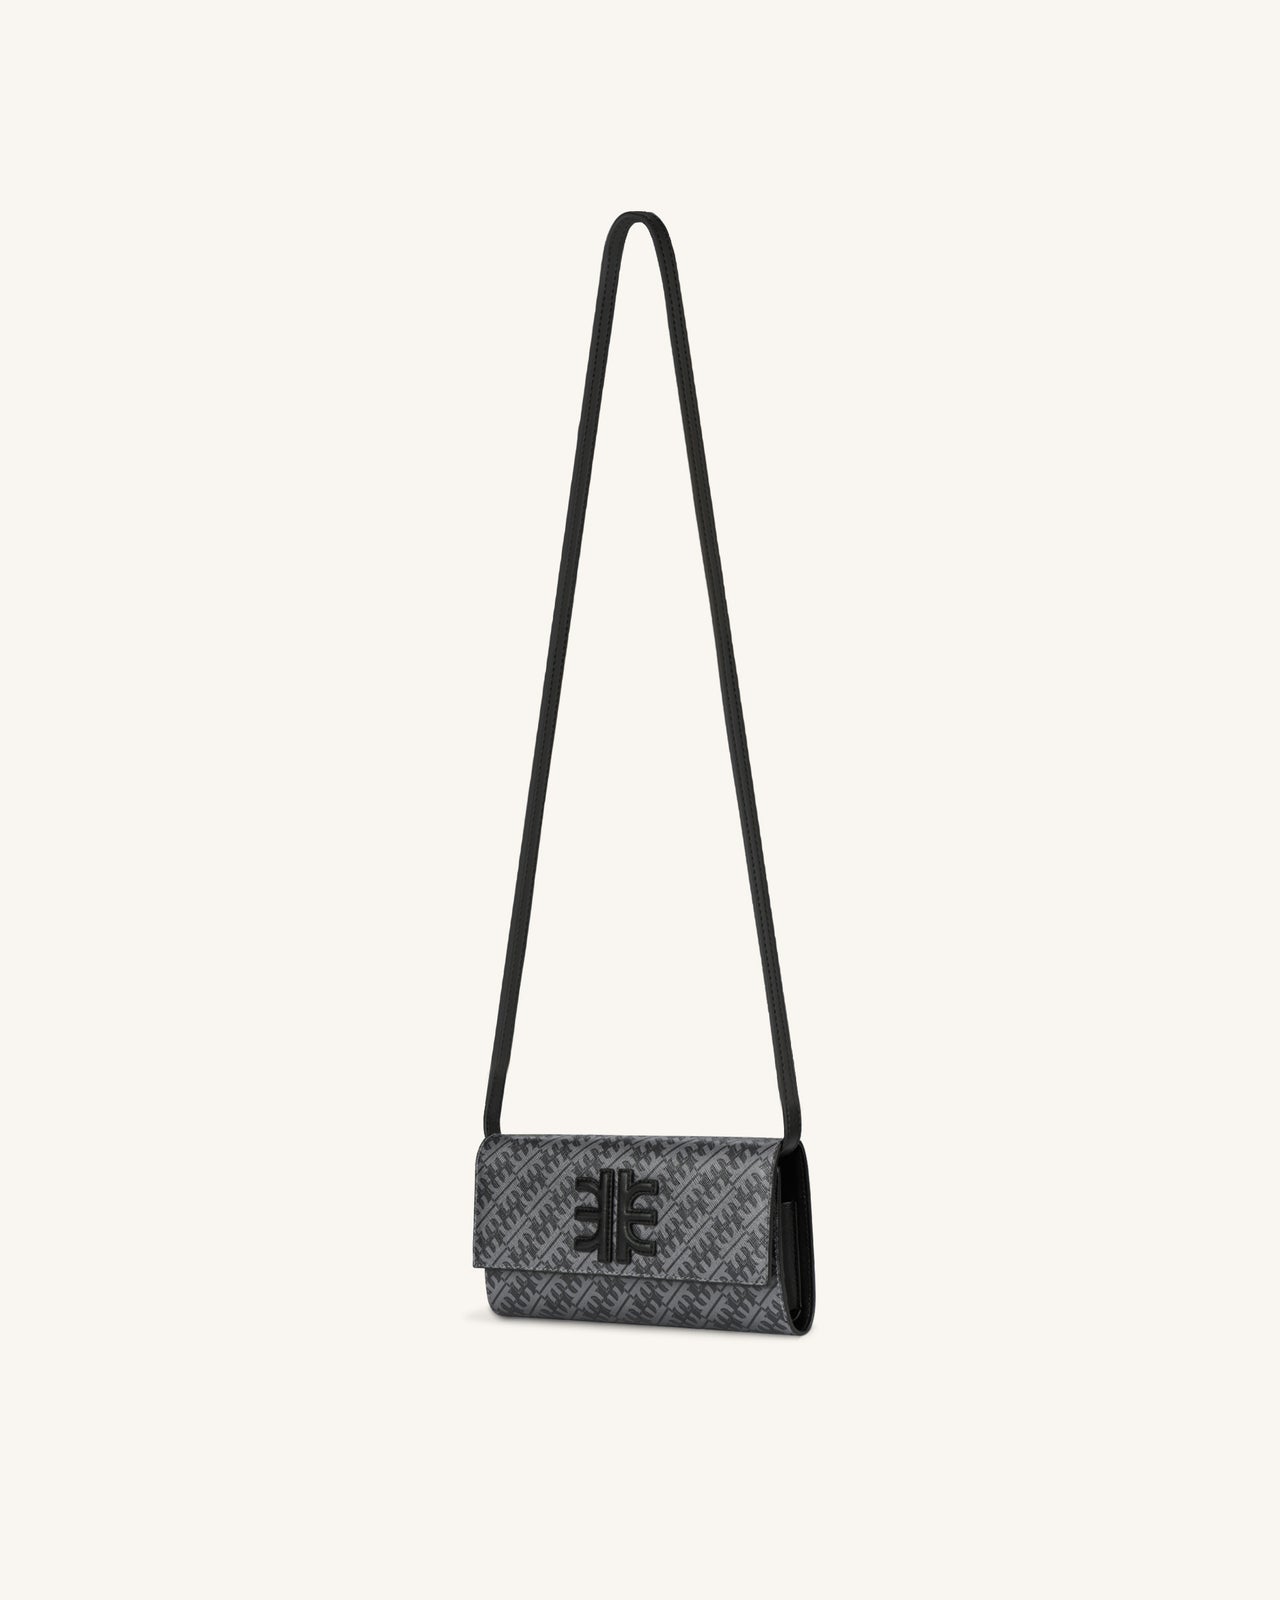 JW Pei Women's FEI Chain Clutch Bag Small Monogram Crossbody Bag